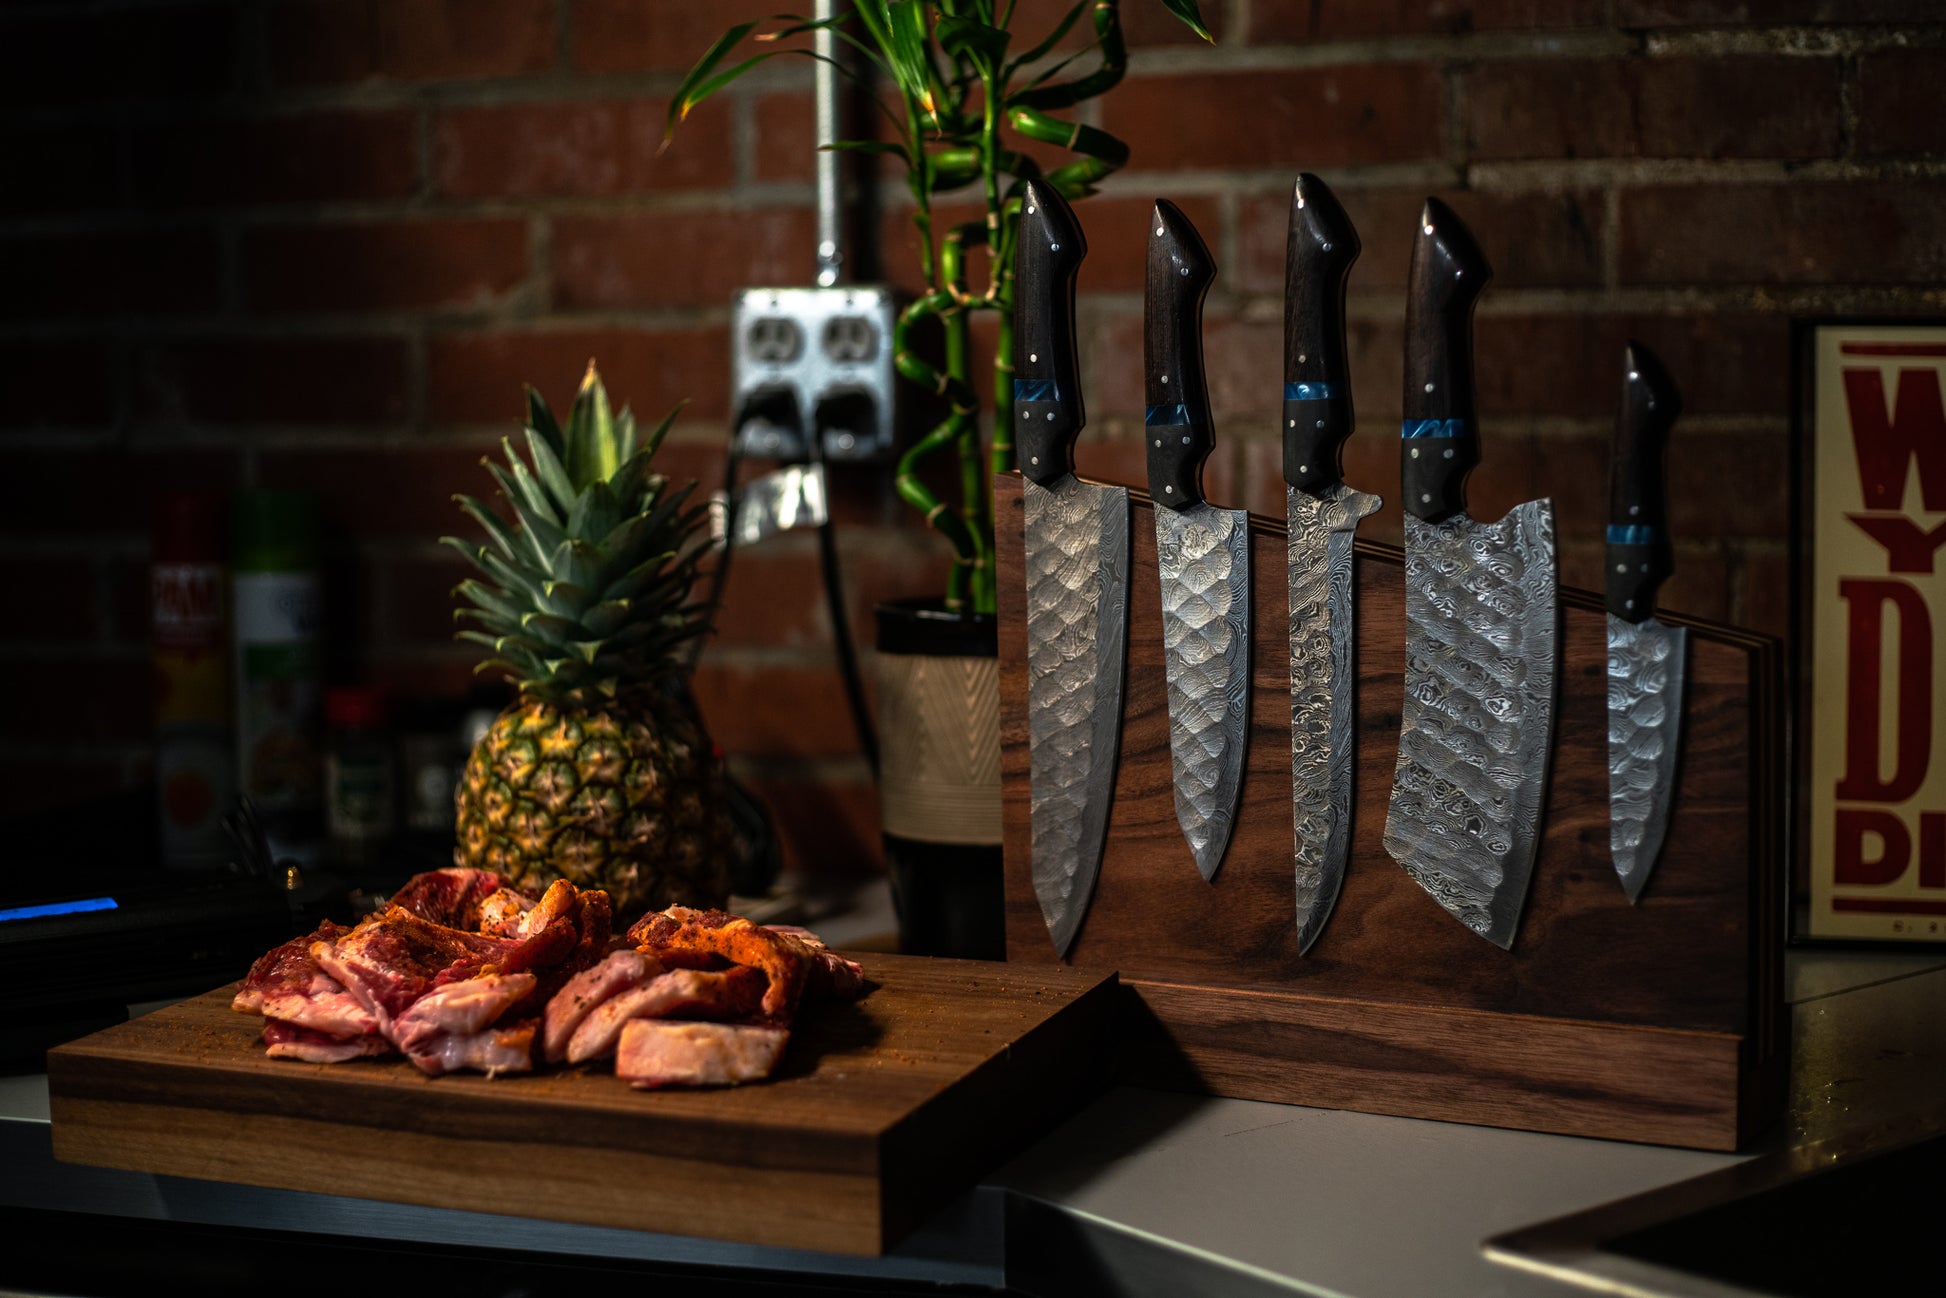 Produce Vegetable Knife, 6 Blade, Square Tip, Brown Handle